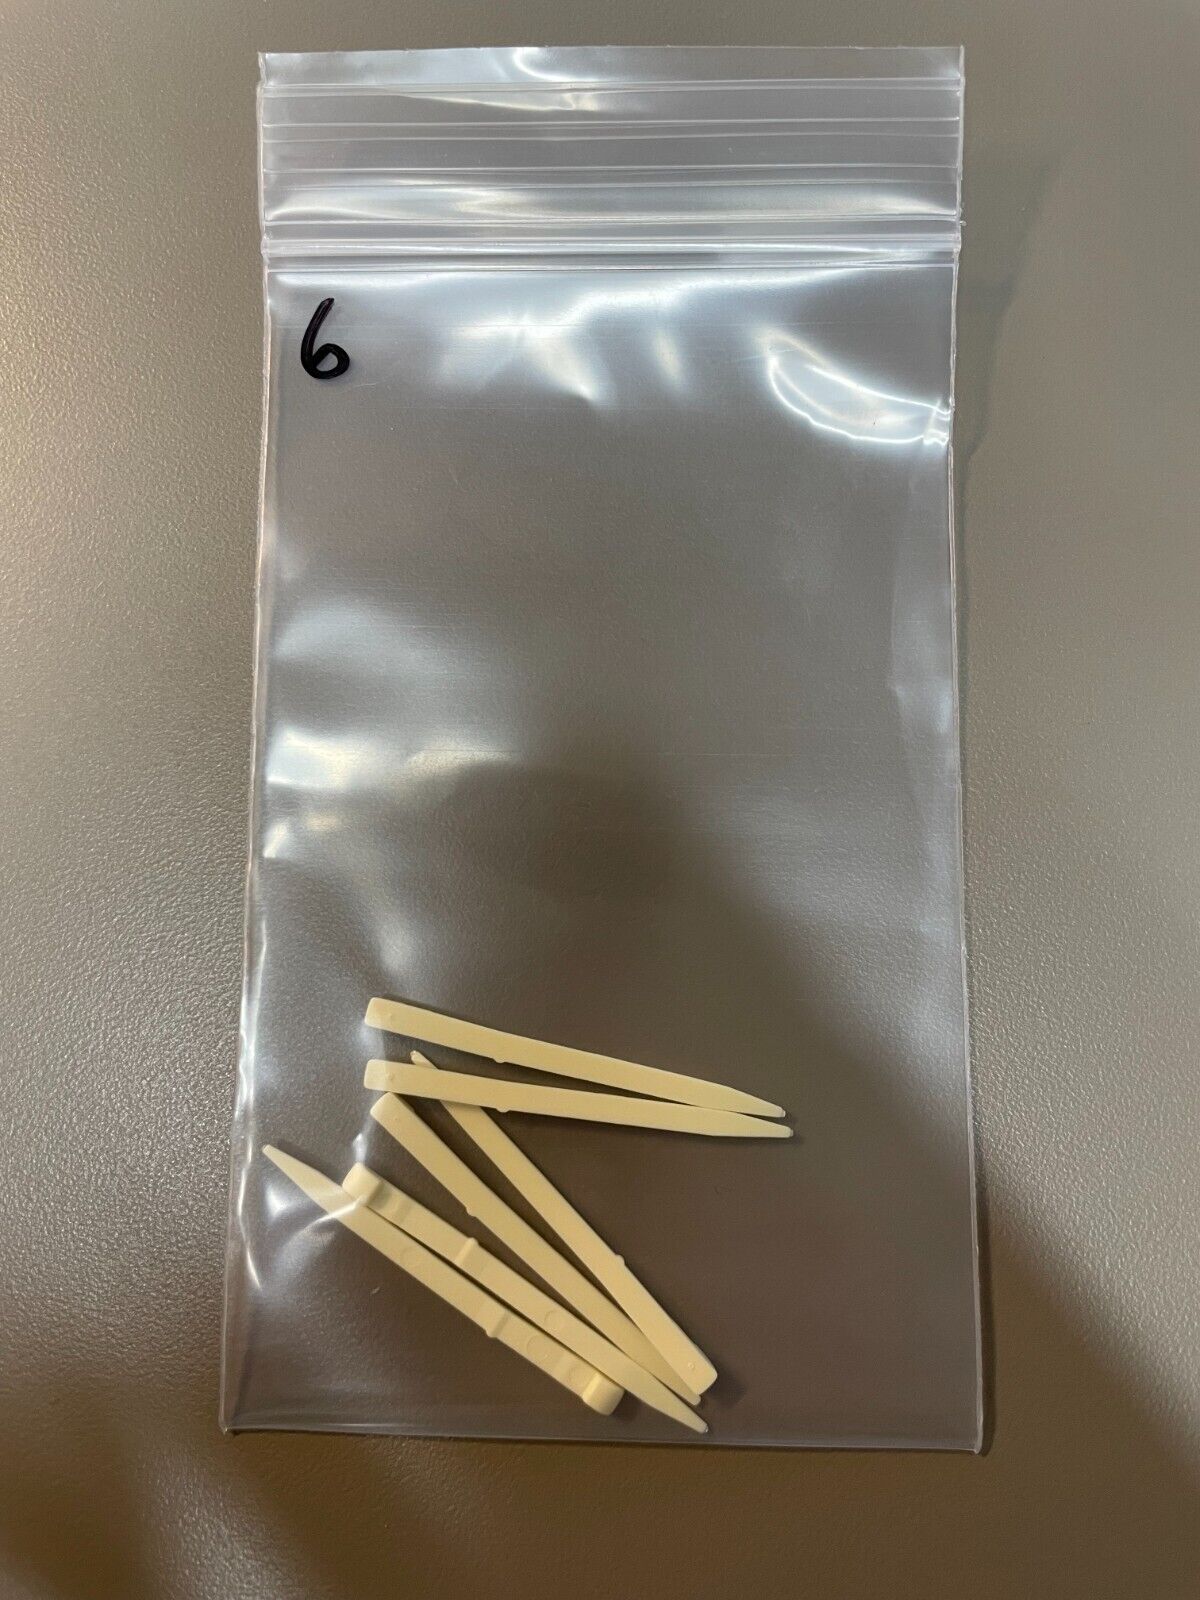 6 Pk. of Victorinox Small Plastic Toothpicks For Pocket Knifes, Wallets, Etc.